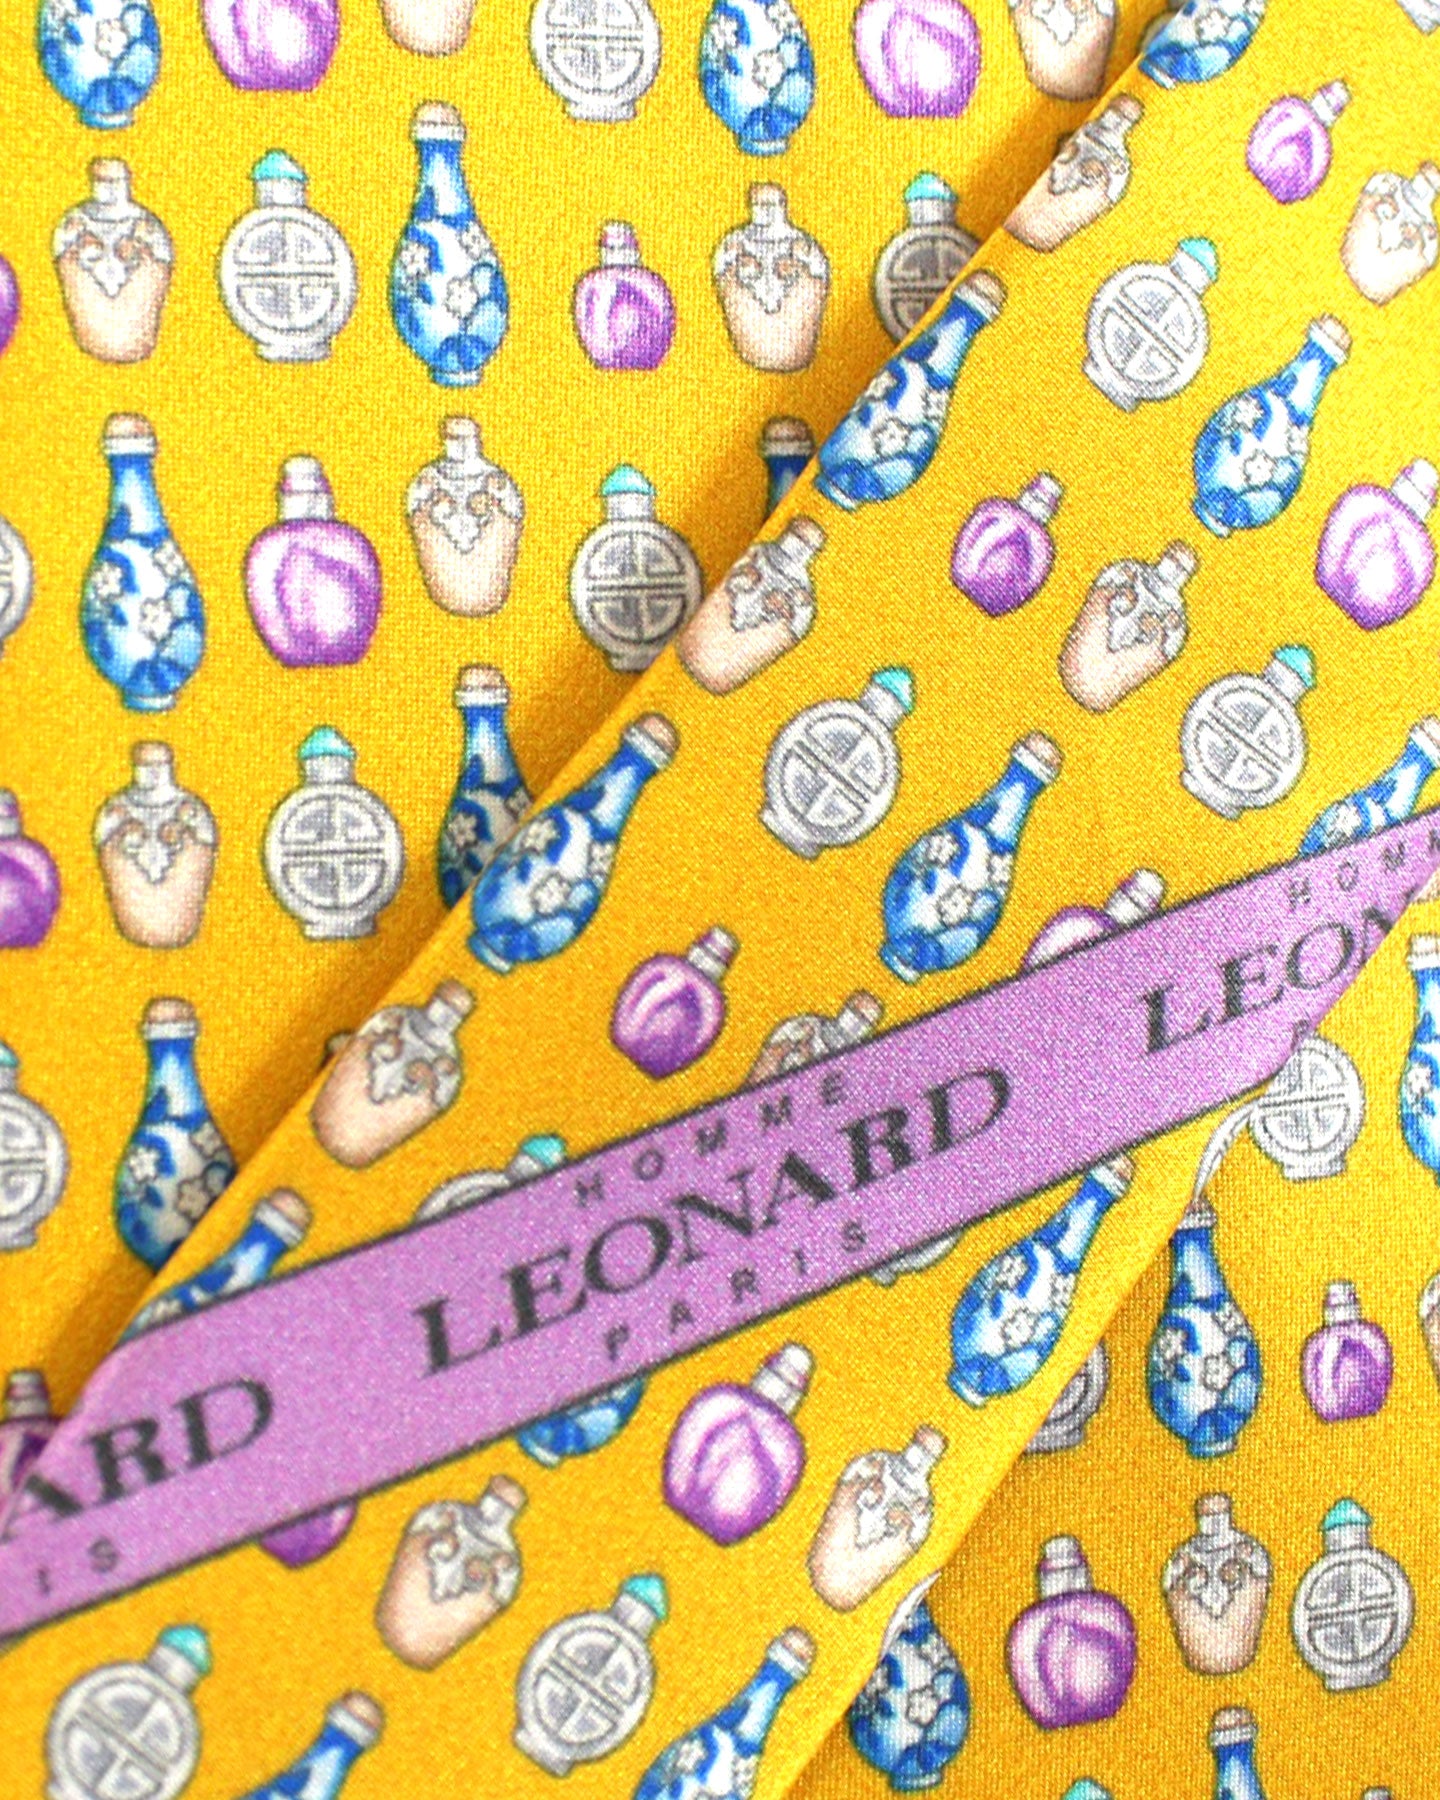 Leonard Paris Tie Orange Gold Bottles Novelty - Luxury Italian Necktie